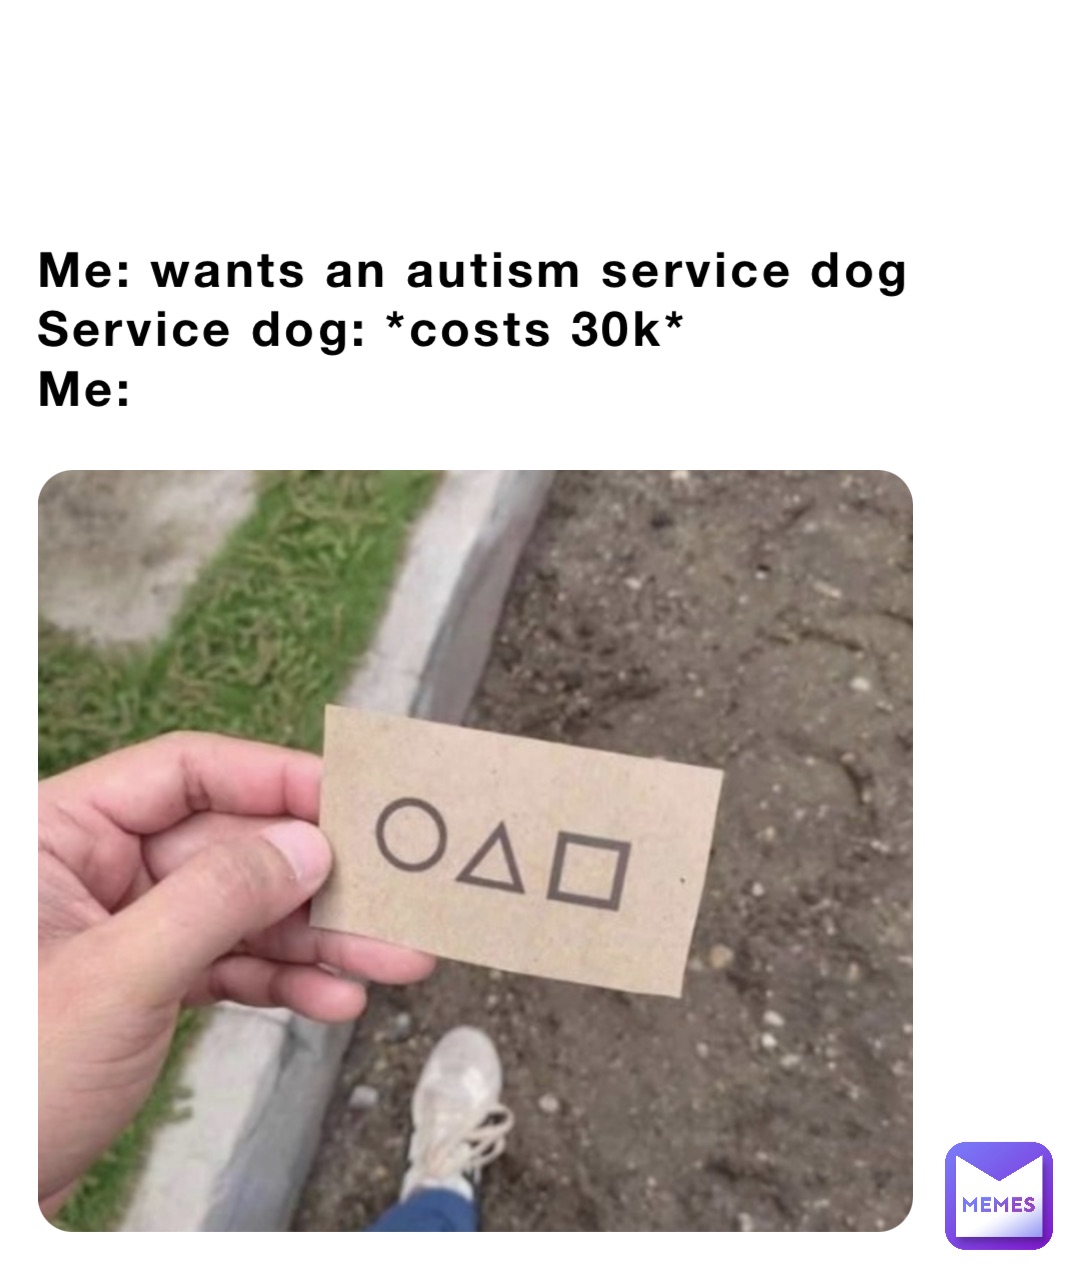 Me: wants an autism service dog
Service dog: *costs 30k*
Me: